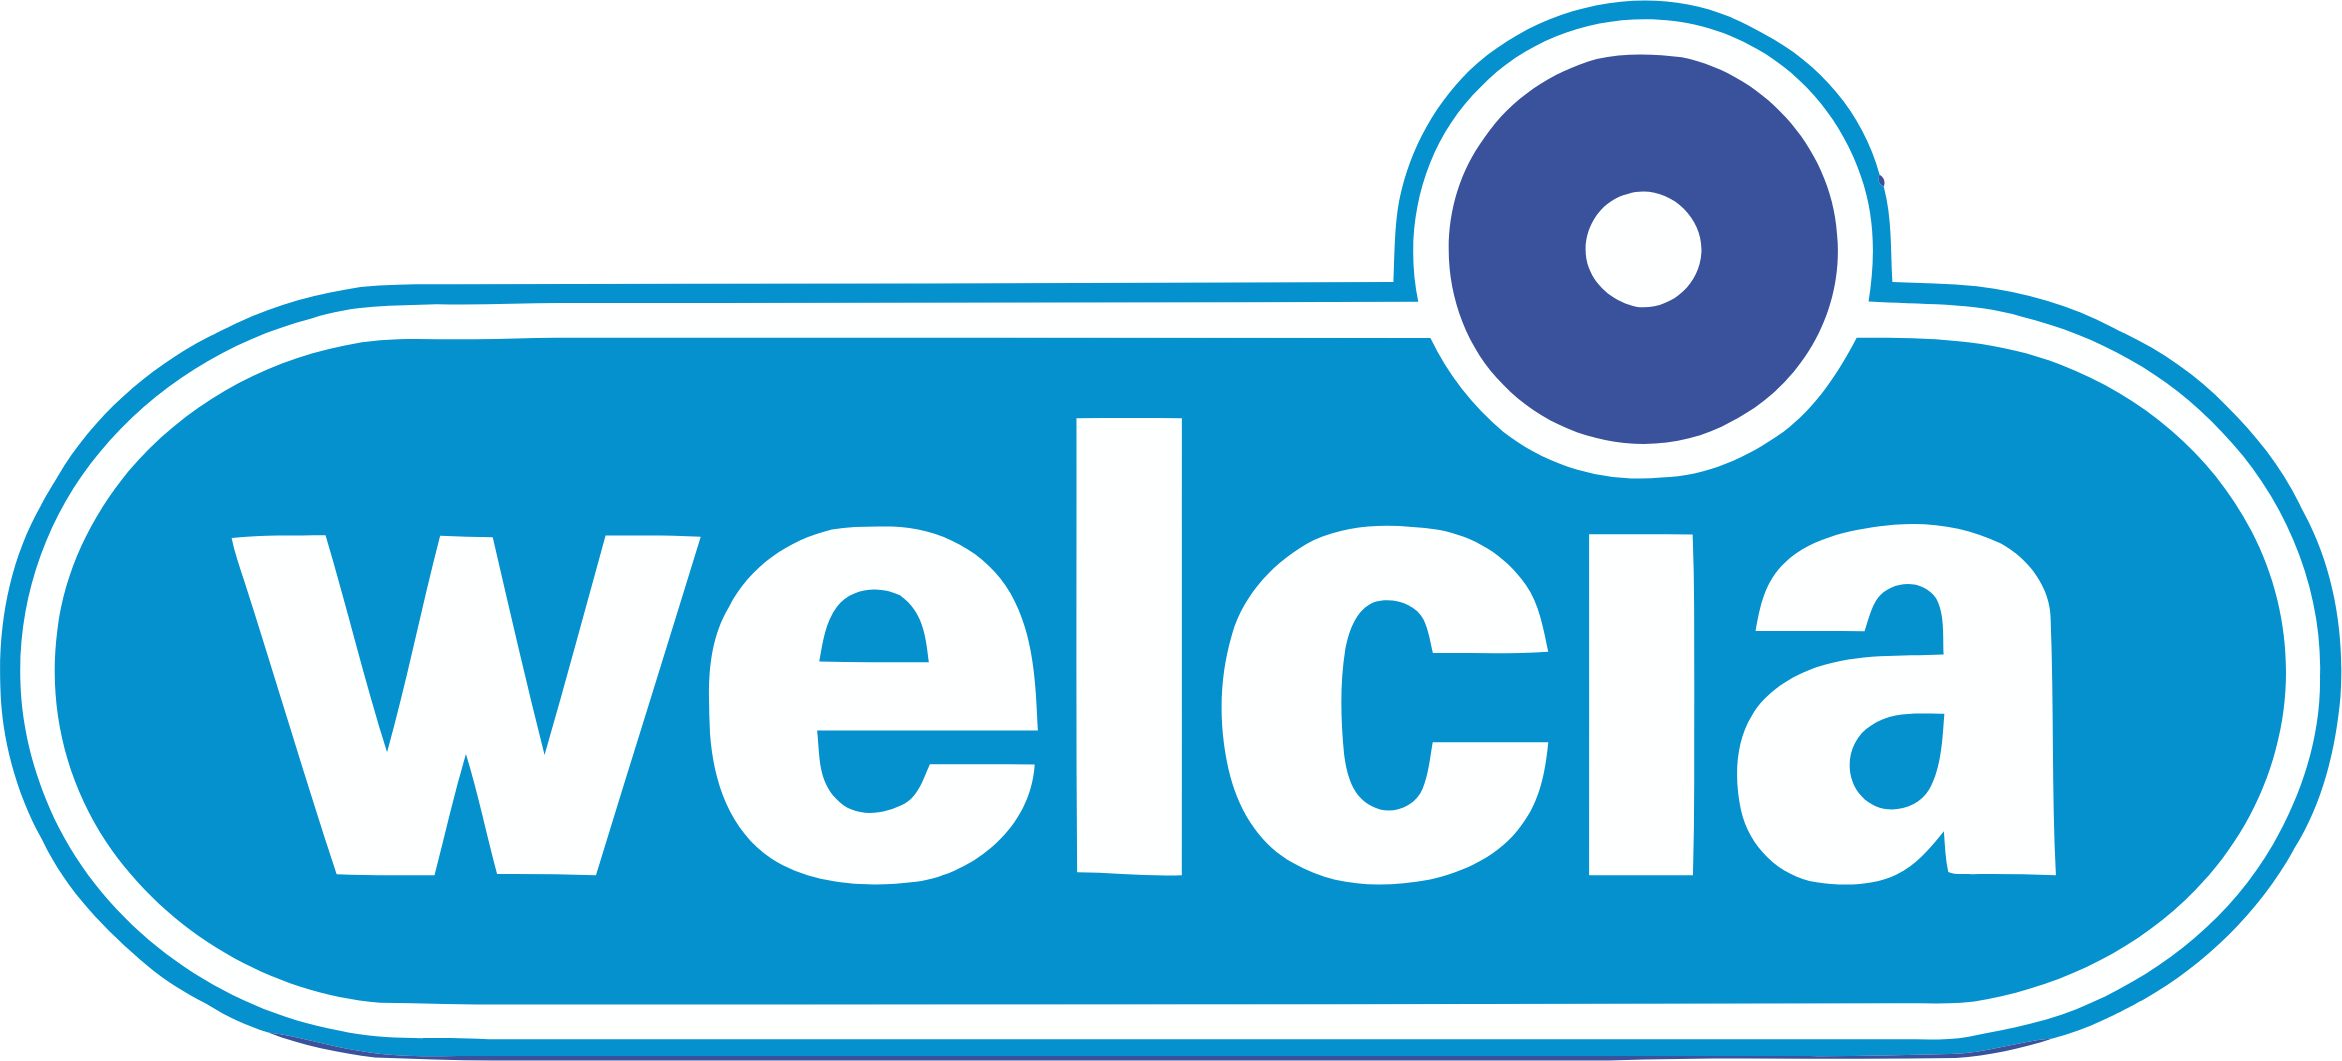 Welcia Holdings logo (PNG transparent)